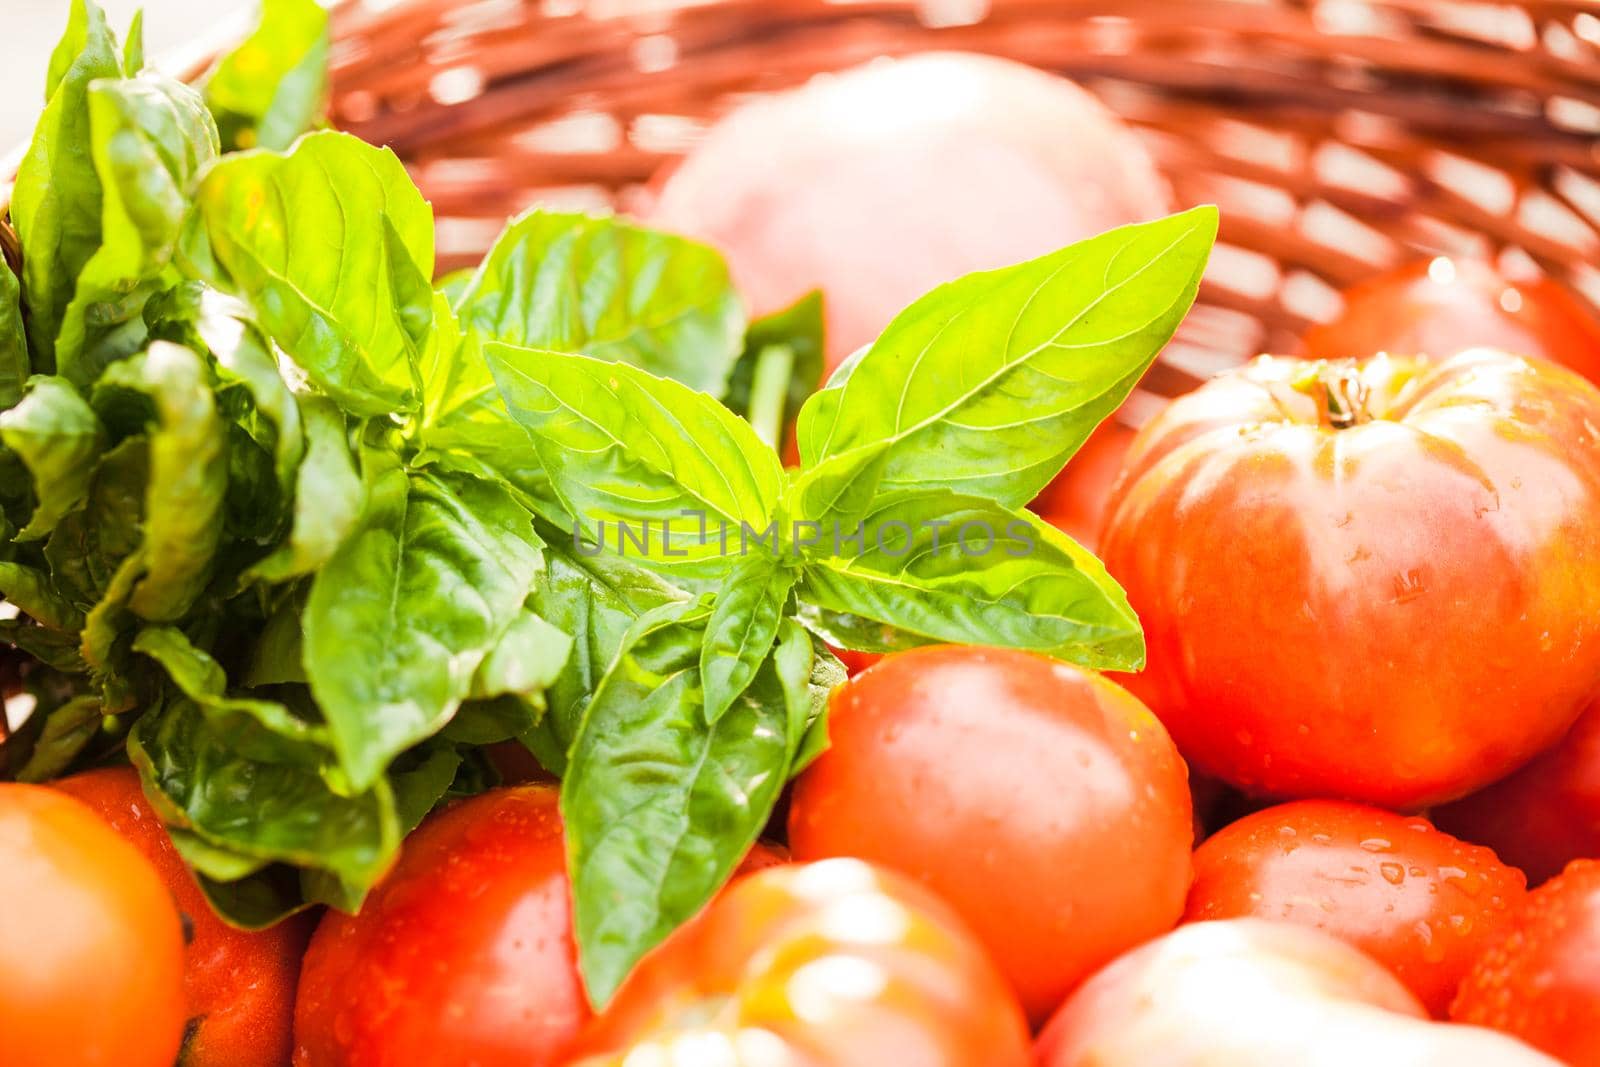 Fresh farm tomatoes and green basil leaves